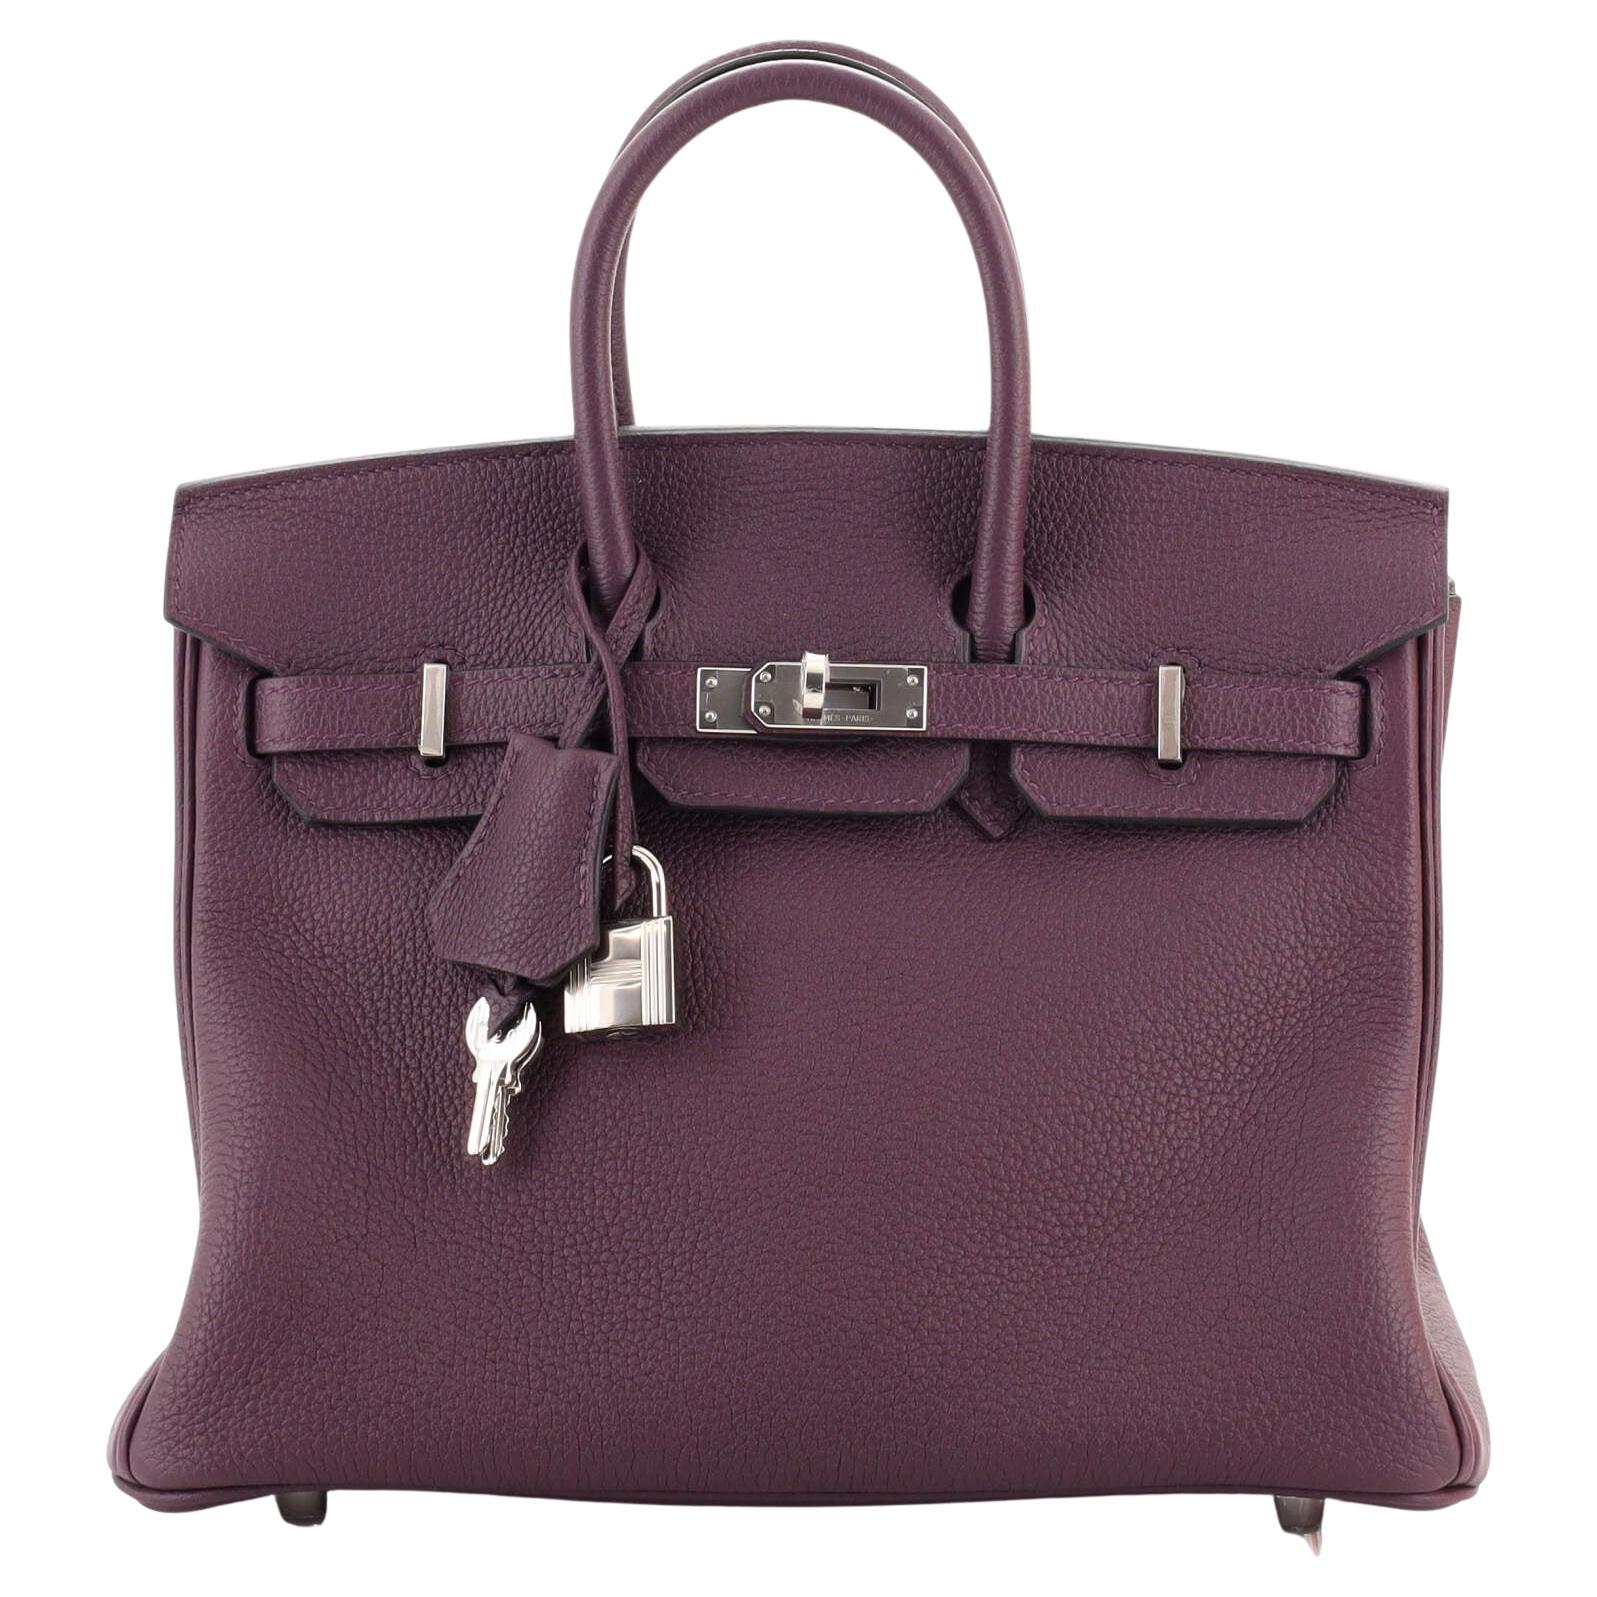 Hermes Birkin Handbag Aubergine Togo with Palladium Hardware 25